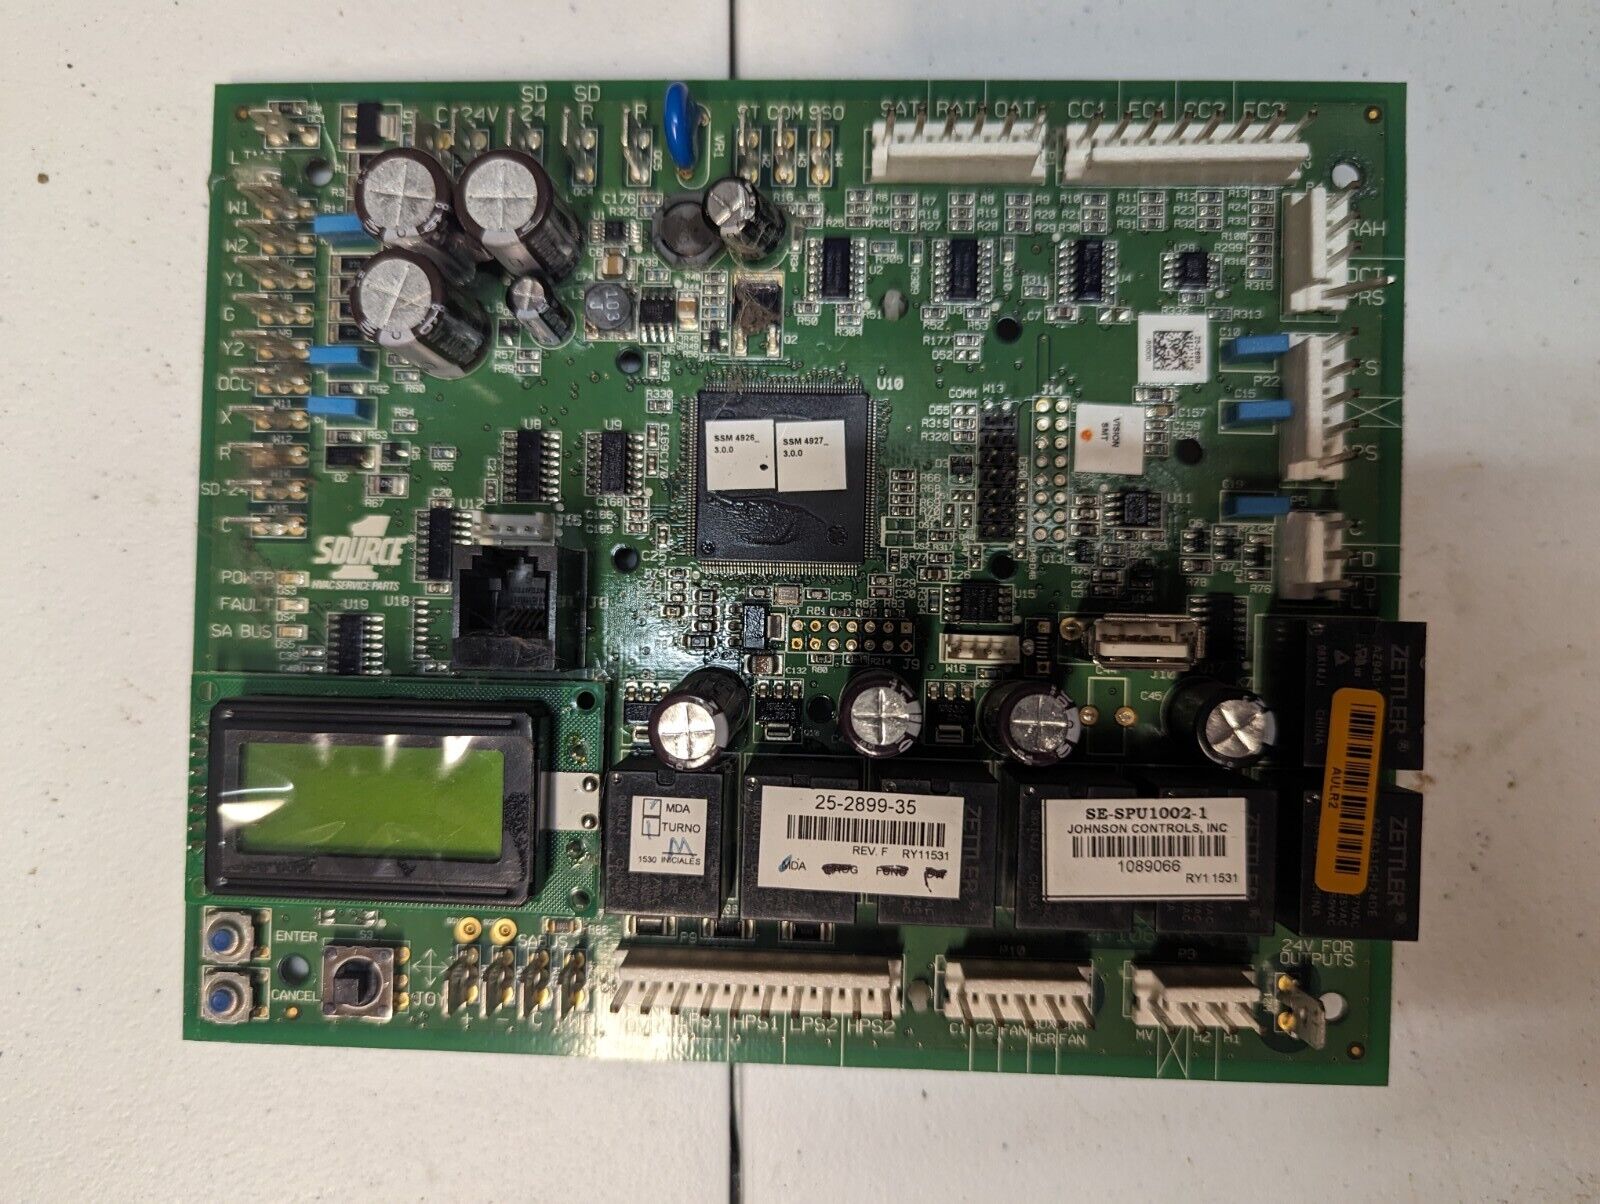 Johnson Controls SE-SPU1002-1 Simplicity SE Unit Display Controller